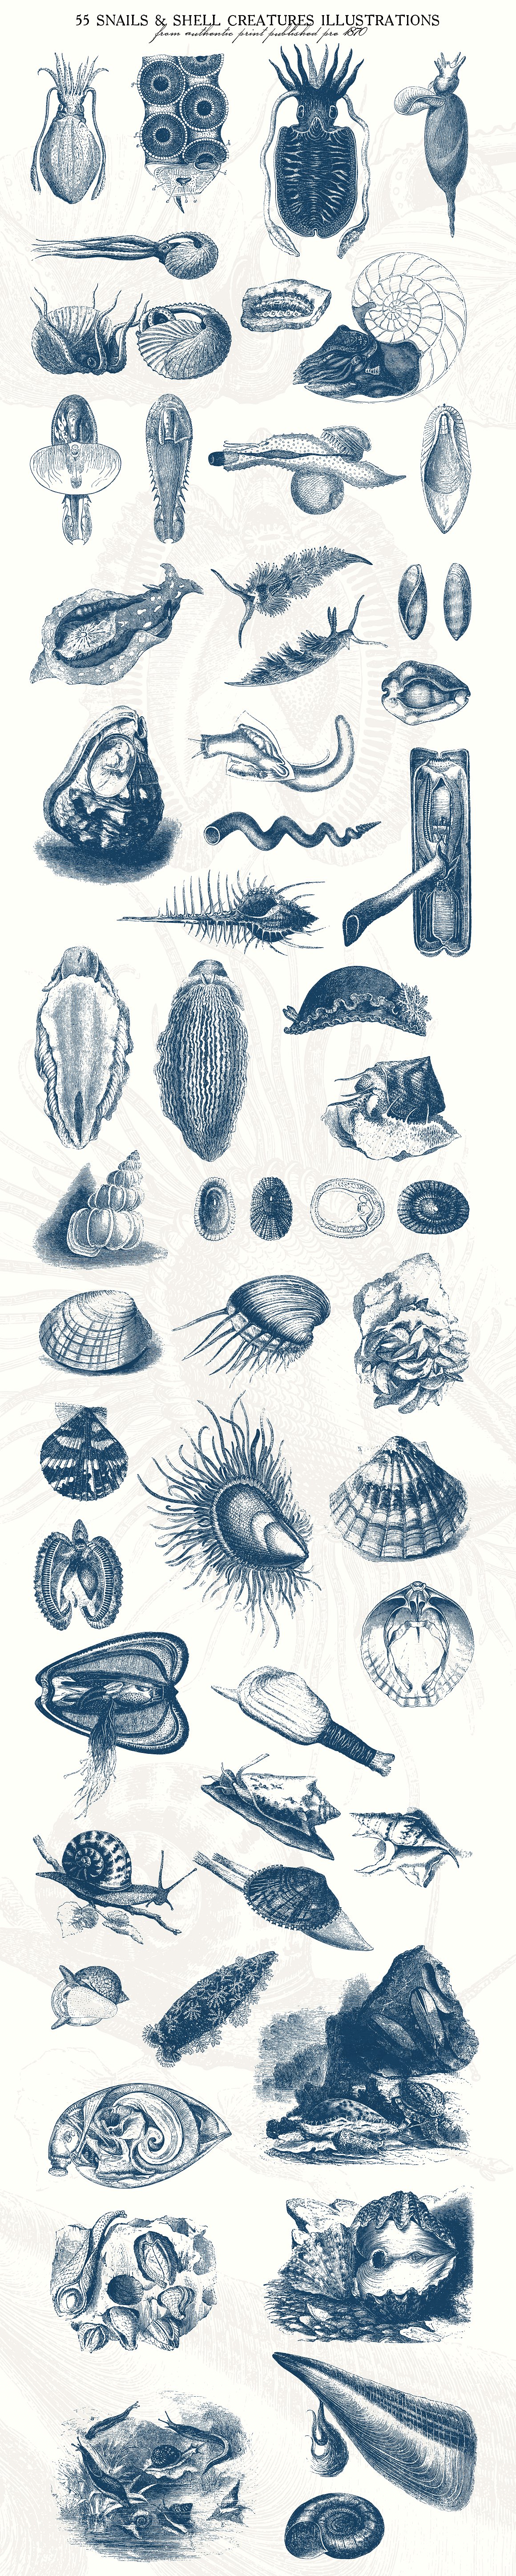 55款蜗牛和贝壳动物复古风插画 55 Snails and Shell Creatures Illus.插图(3)